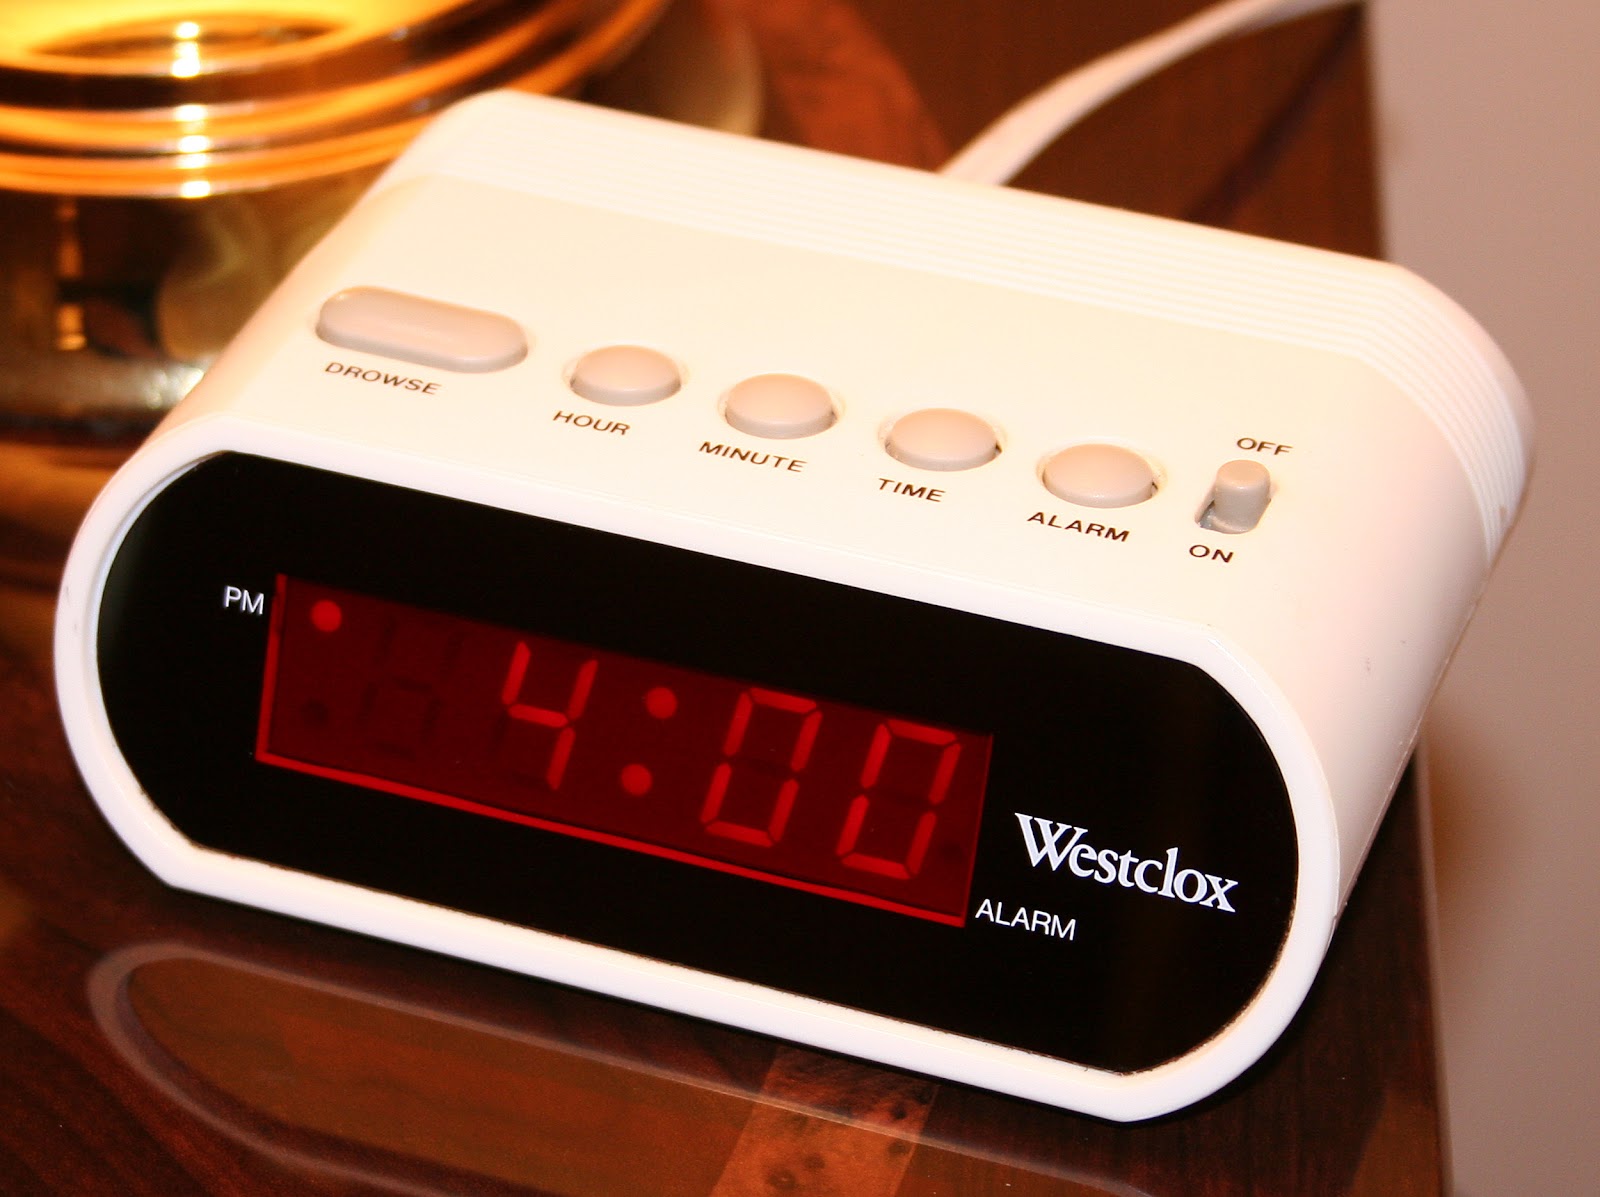 Basic digital alarm clock